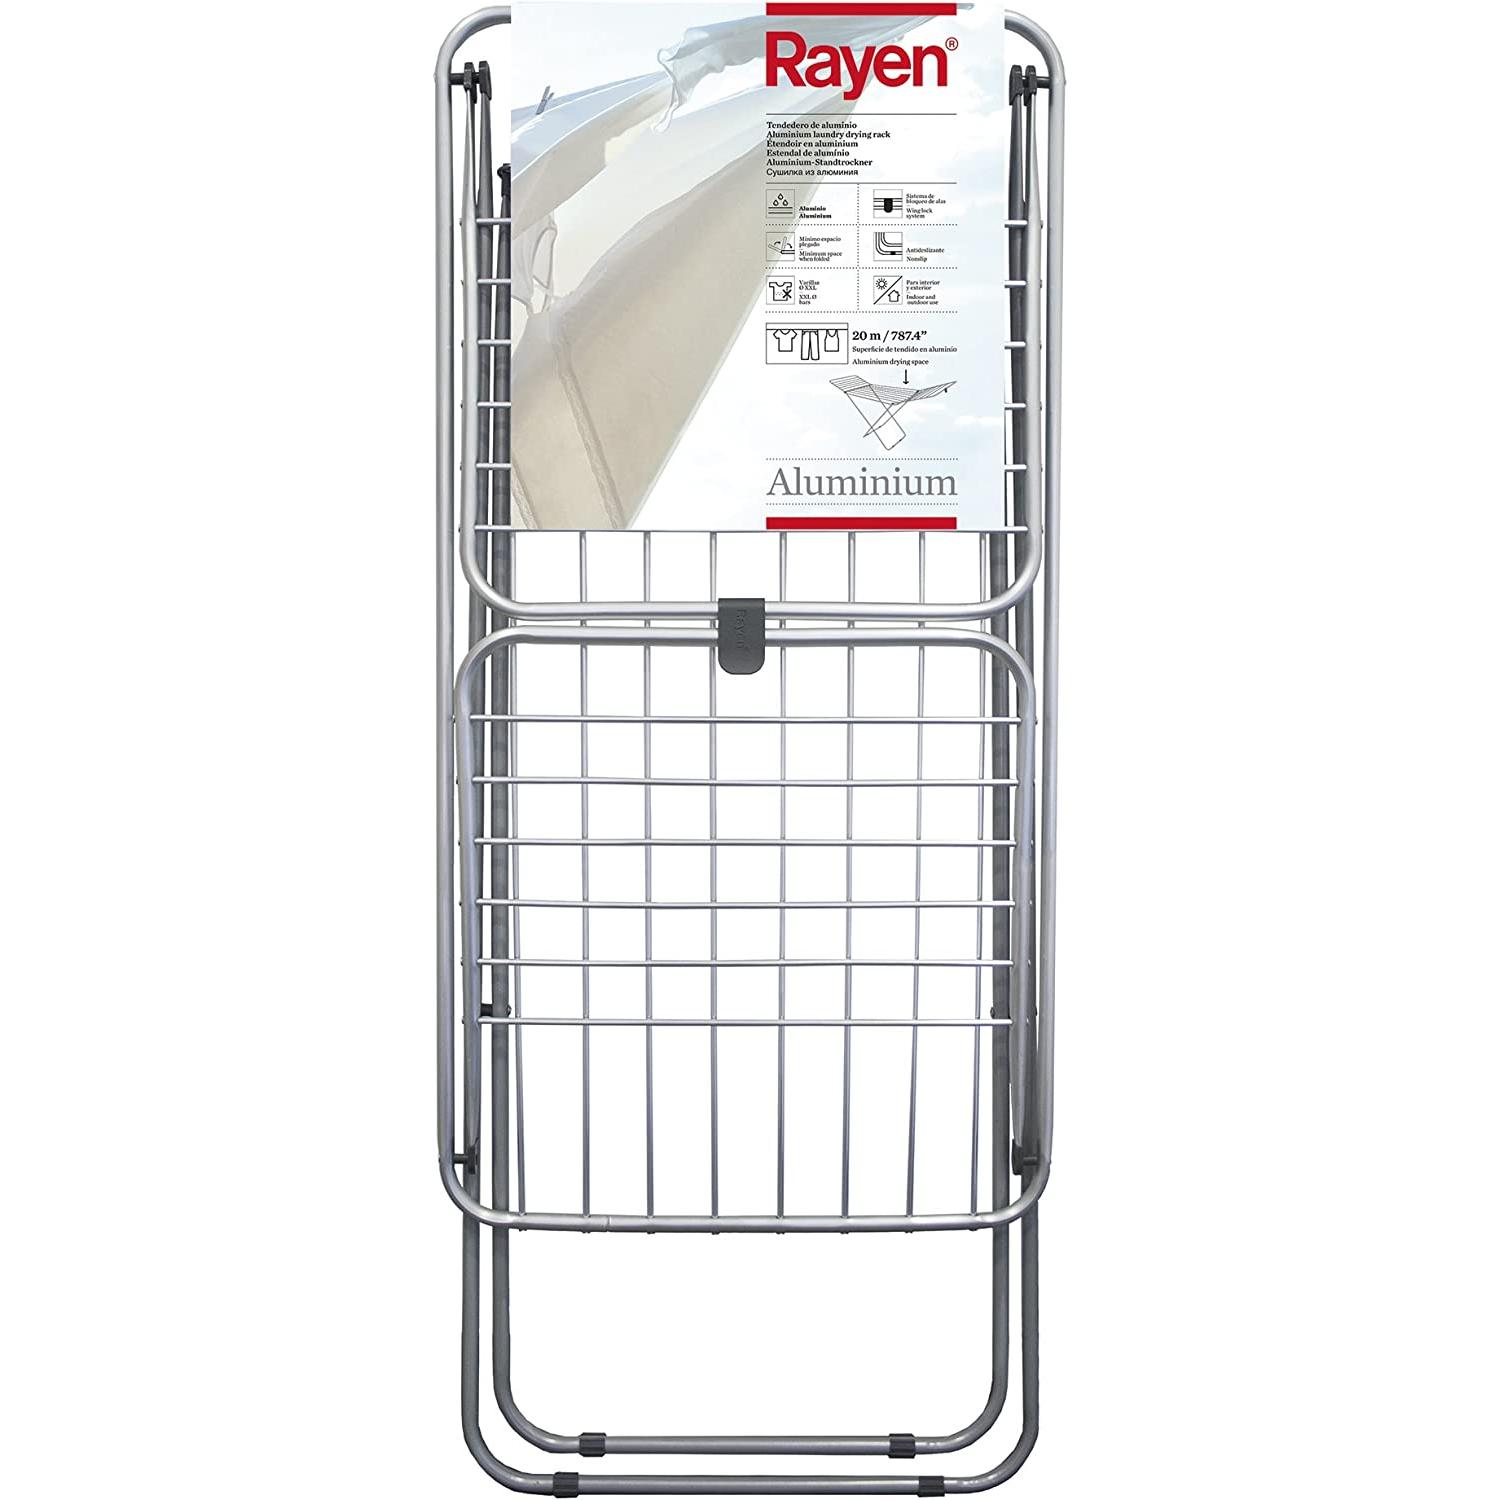 Rayen 0037 - Tendedero bañera plegable, capacidad de tendido 10